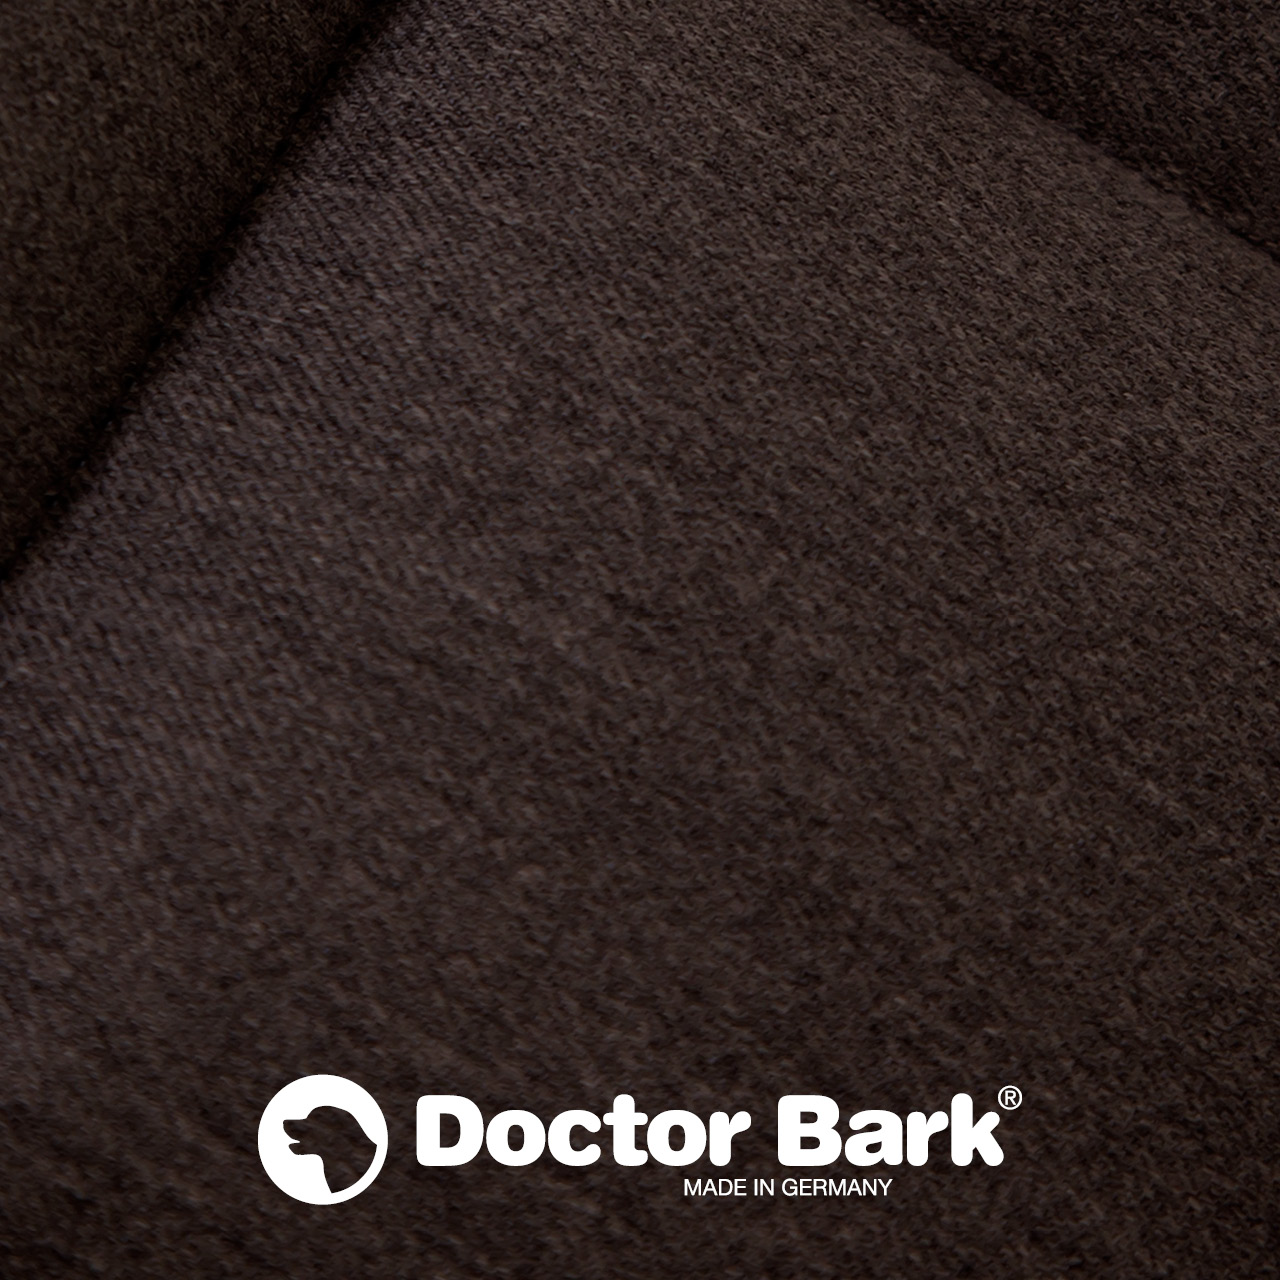 Doctor Bark - Hunde Autoschondecke - Beifahrersitz - braun